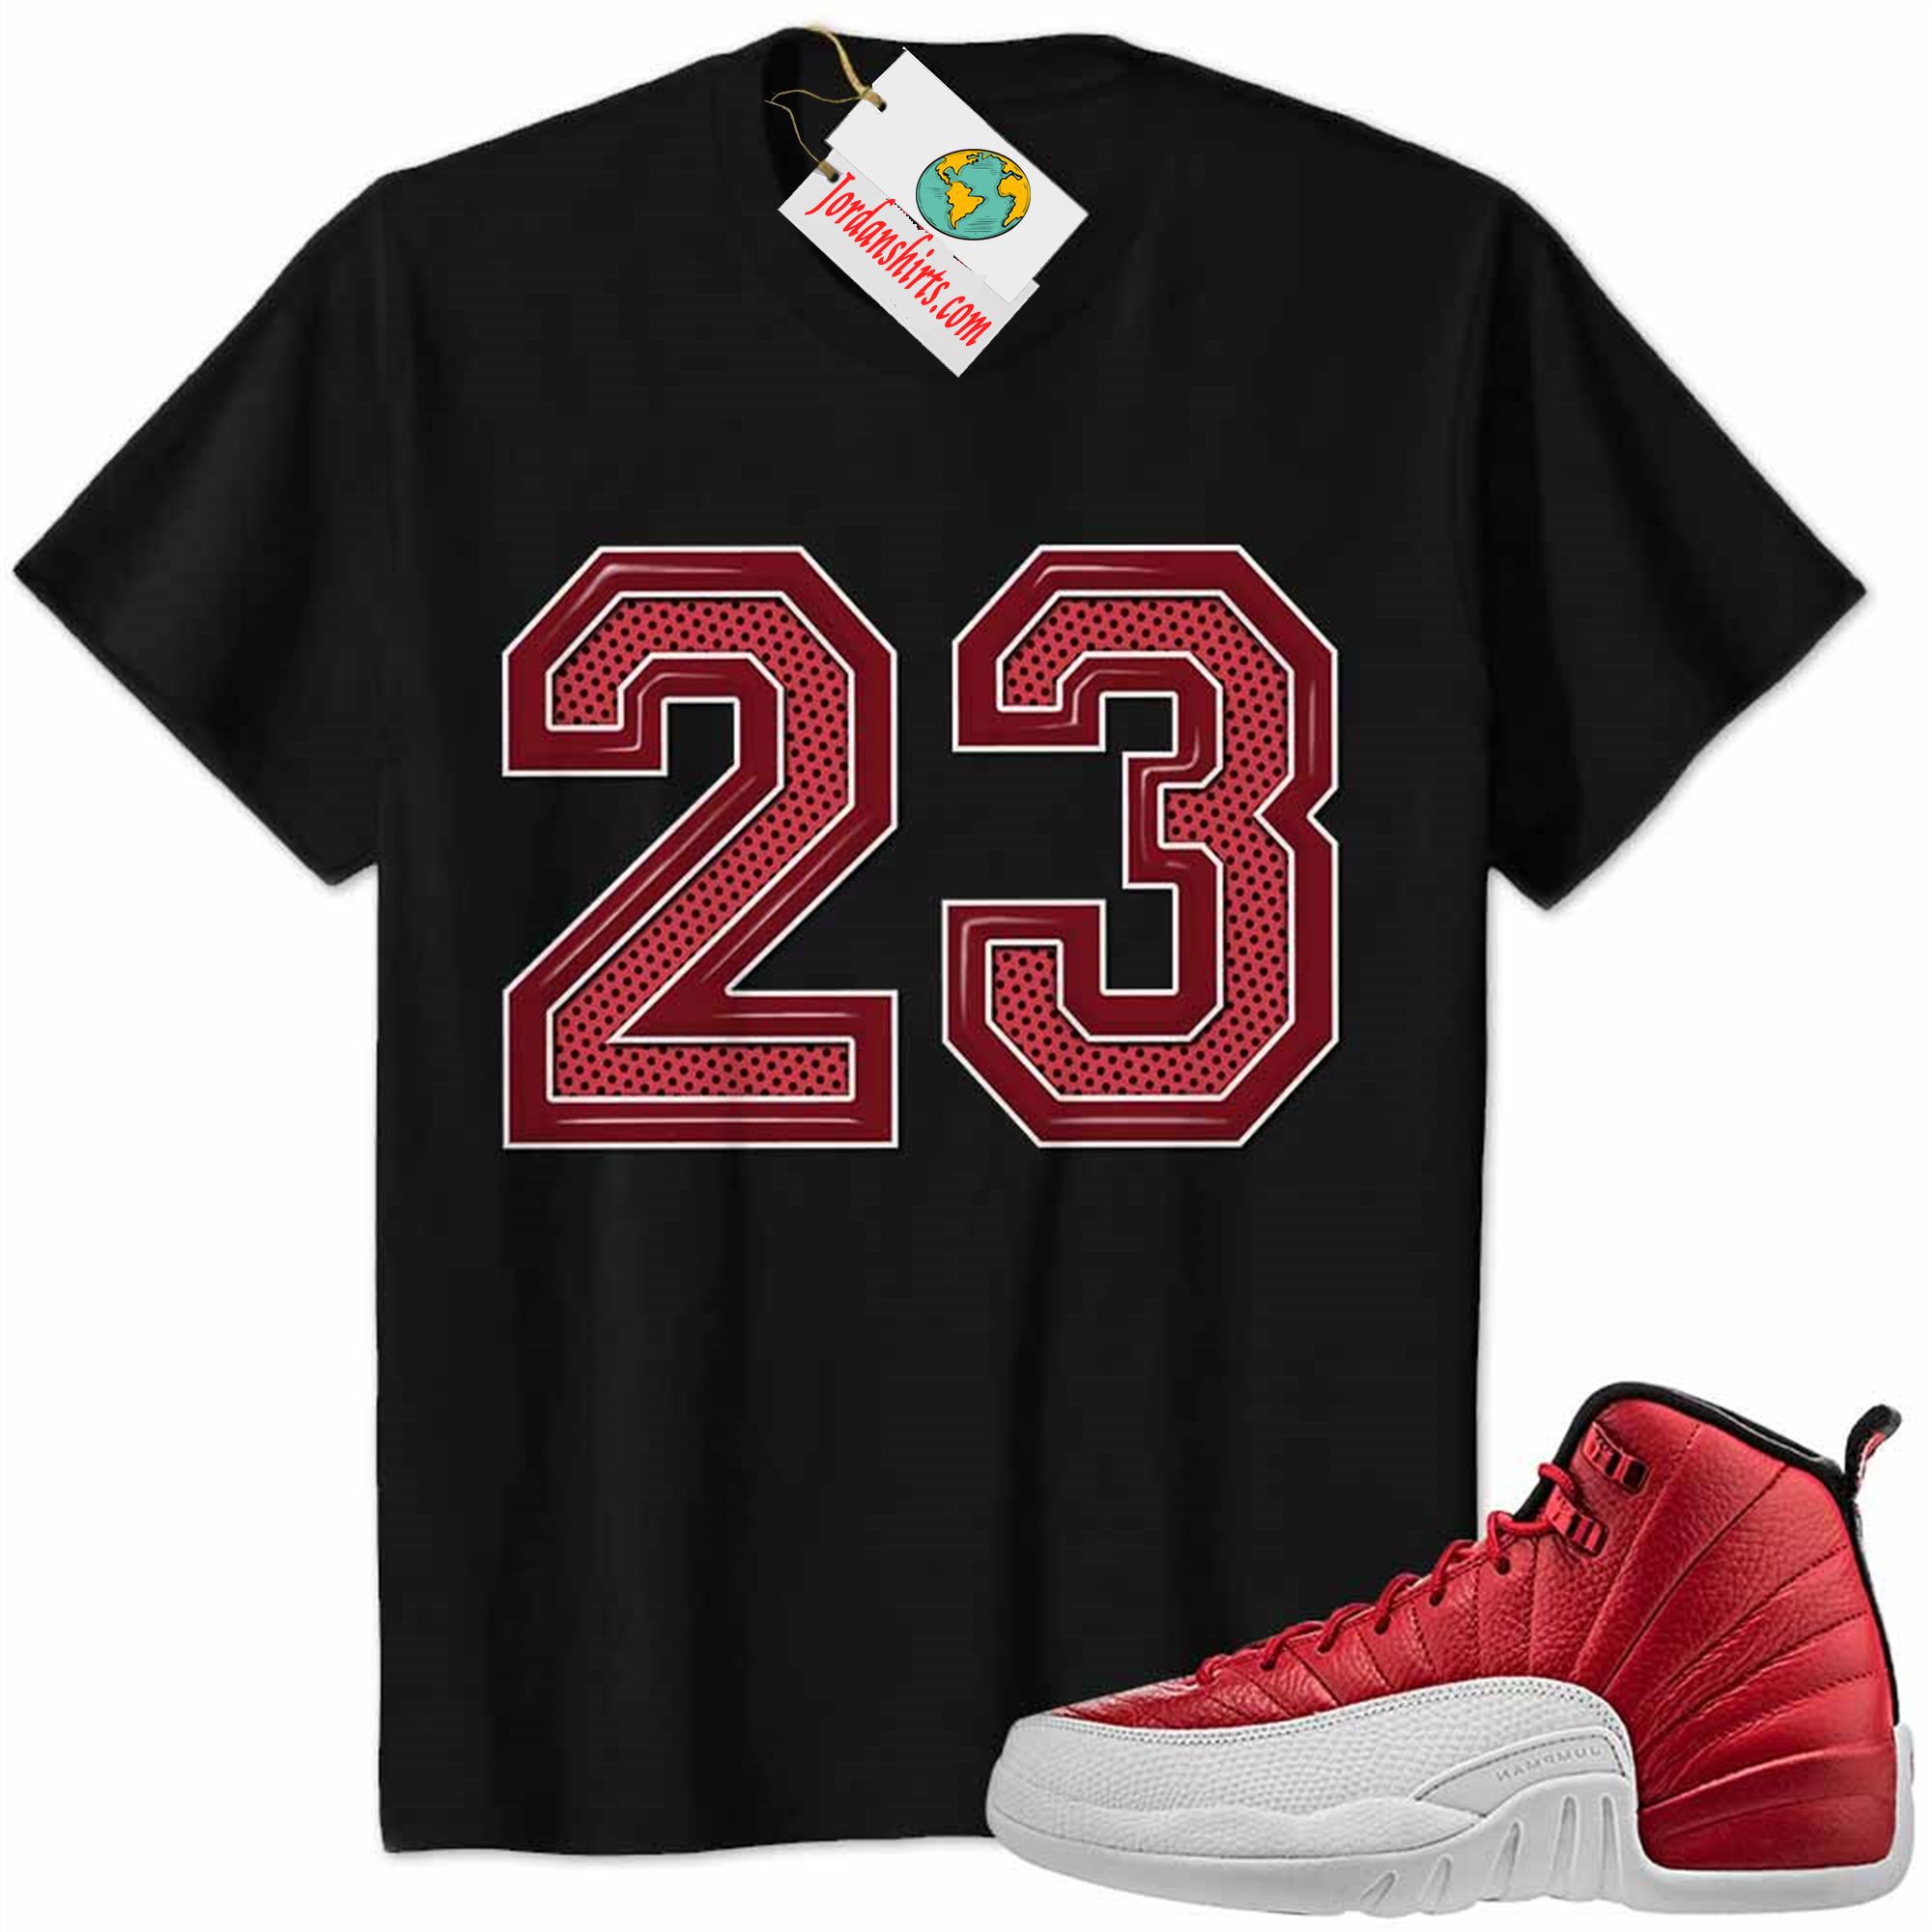 Jordan 12 Shirt, Jordan 12 Gym Red Shirt Michael Jordan Number 23 Black Full Size Up To 5xl